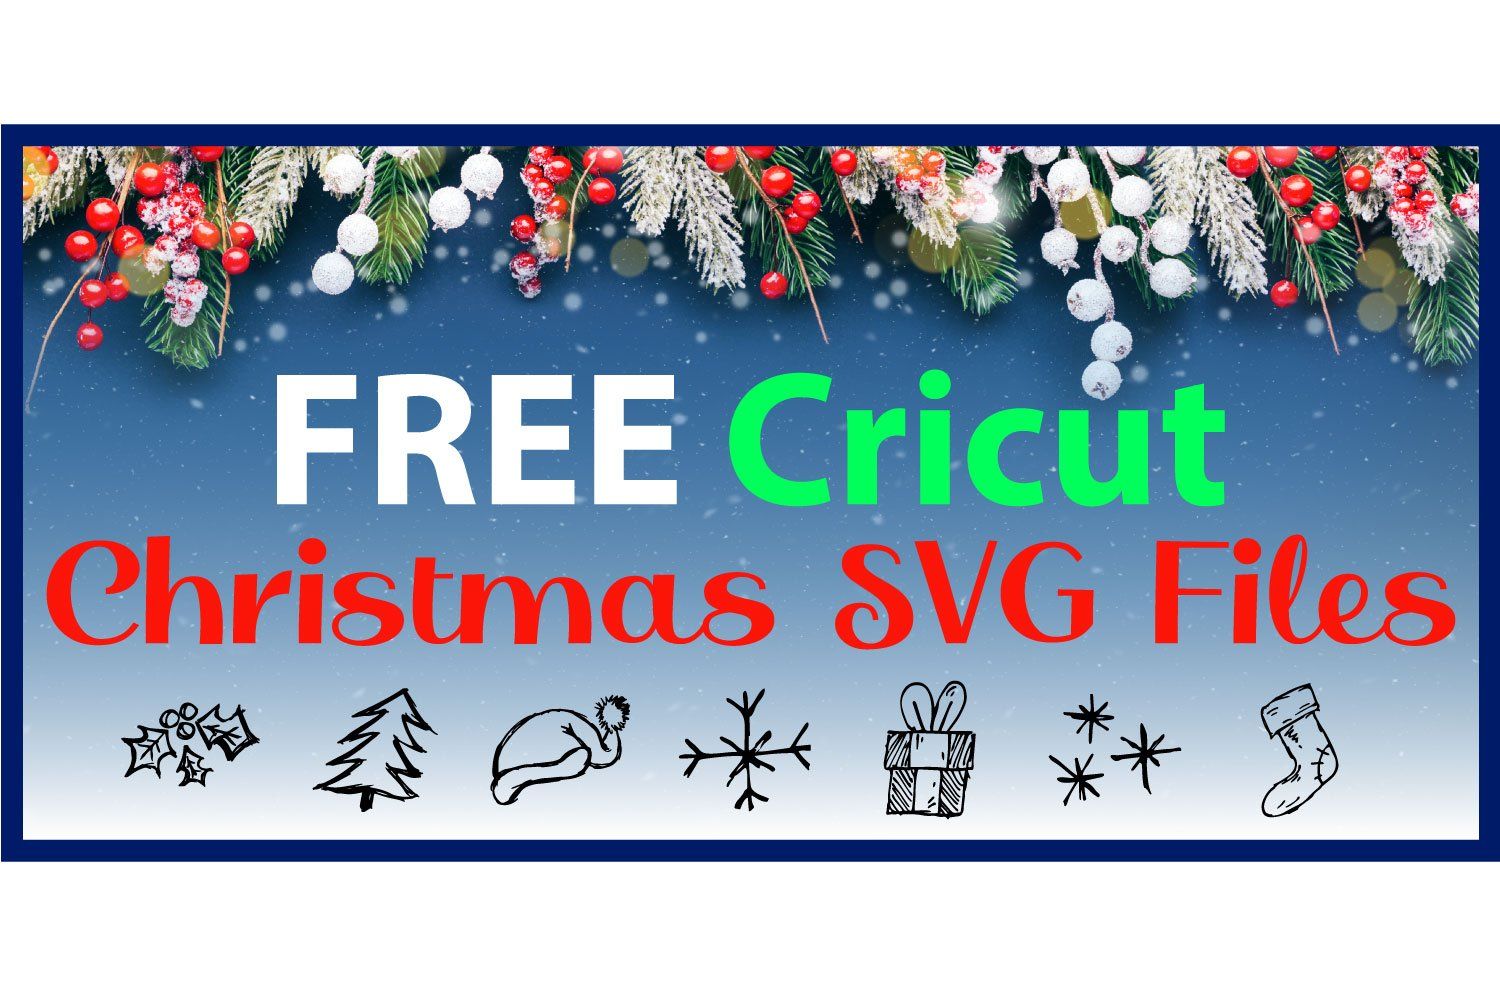 Free Cricut Christmas SVG Files Graphic